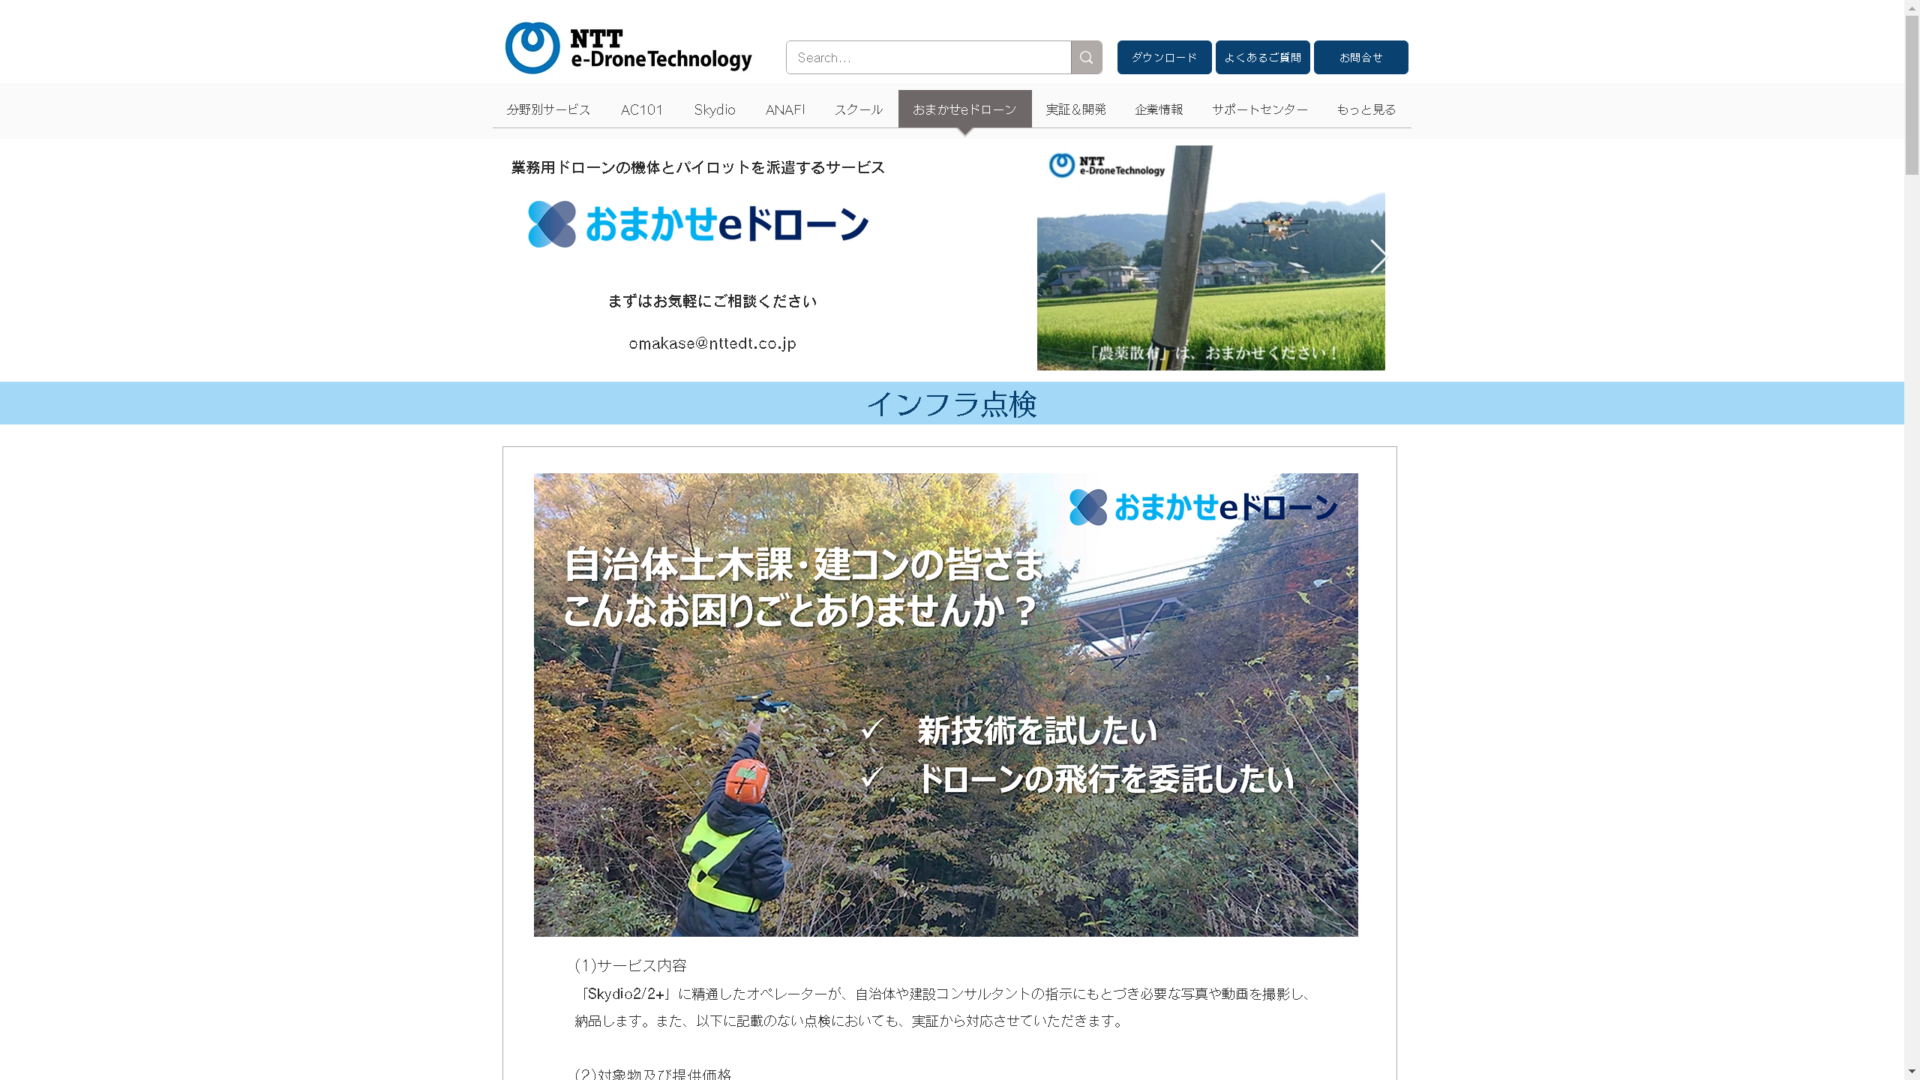 株式会社NTT e-Drone Technology